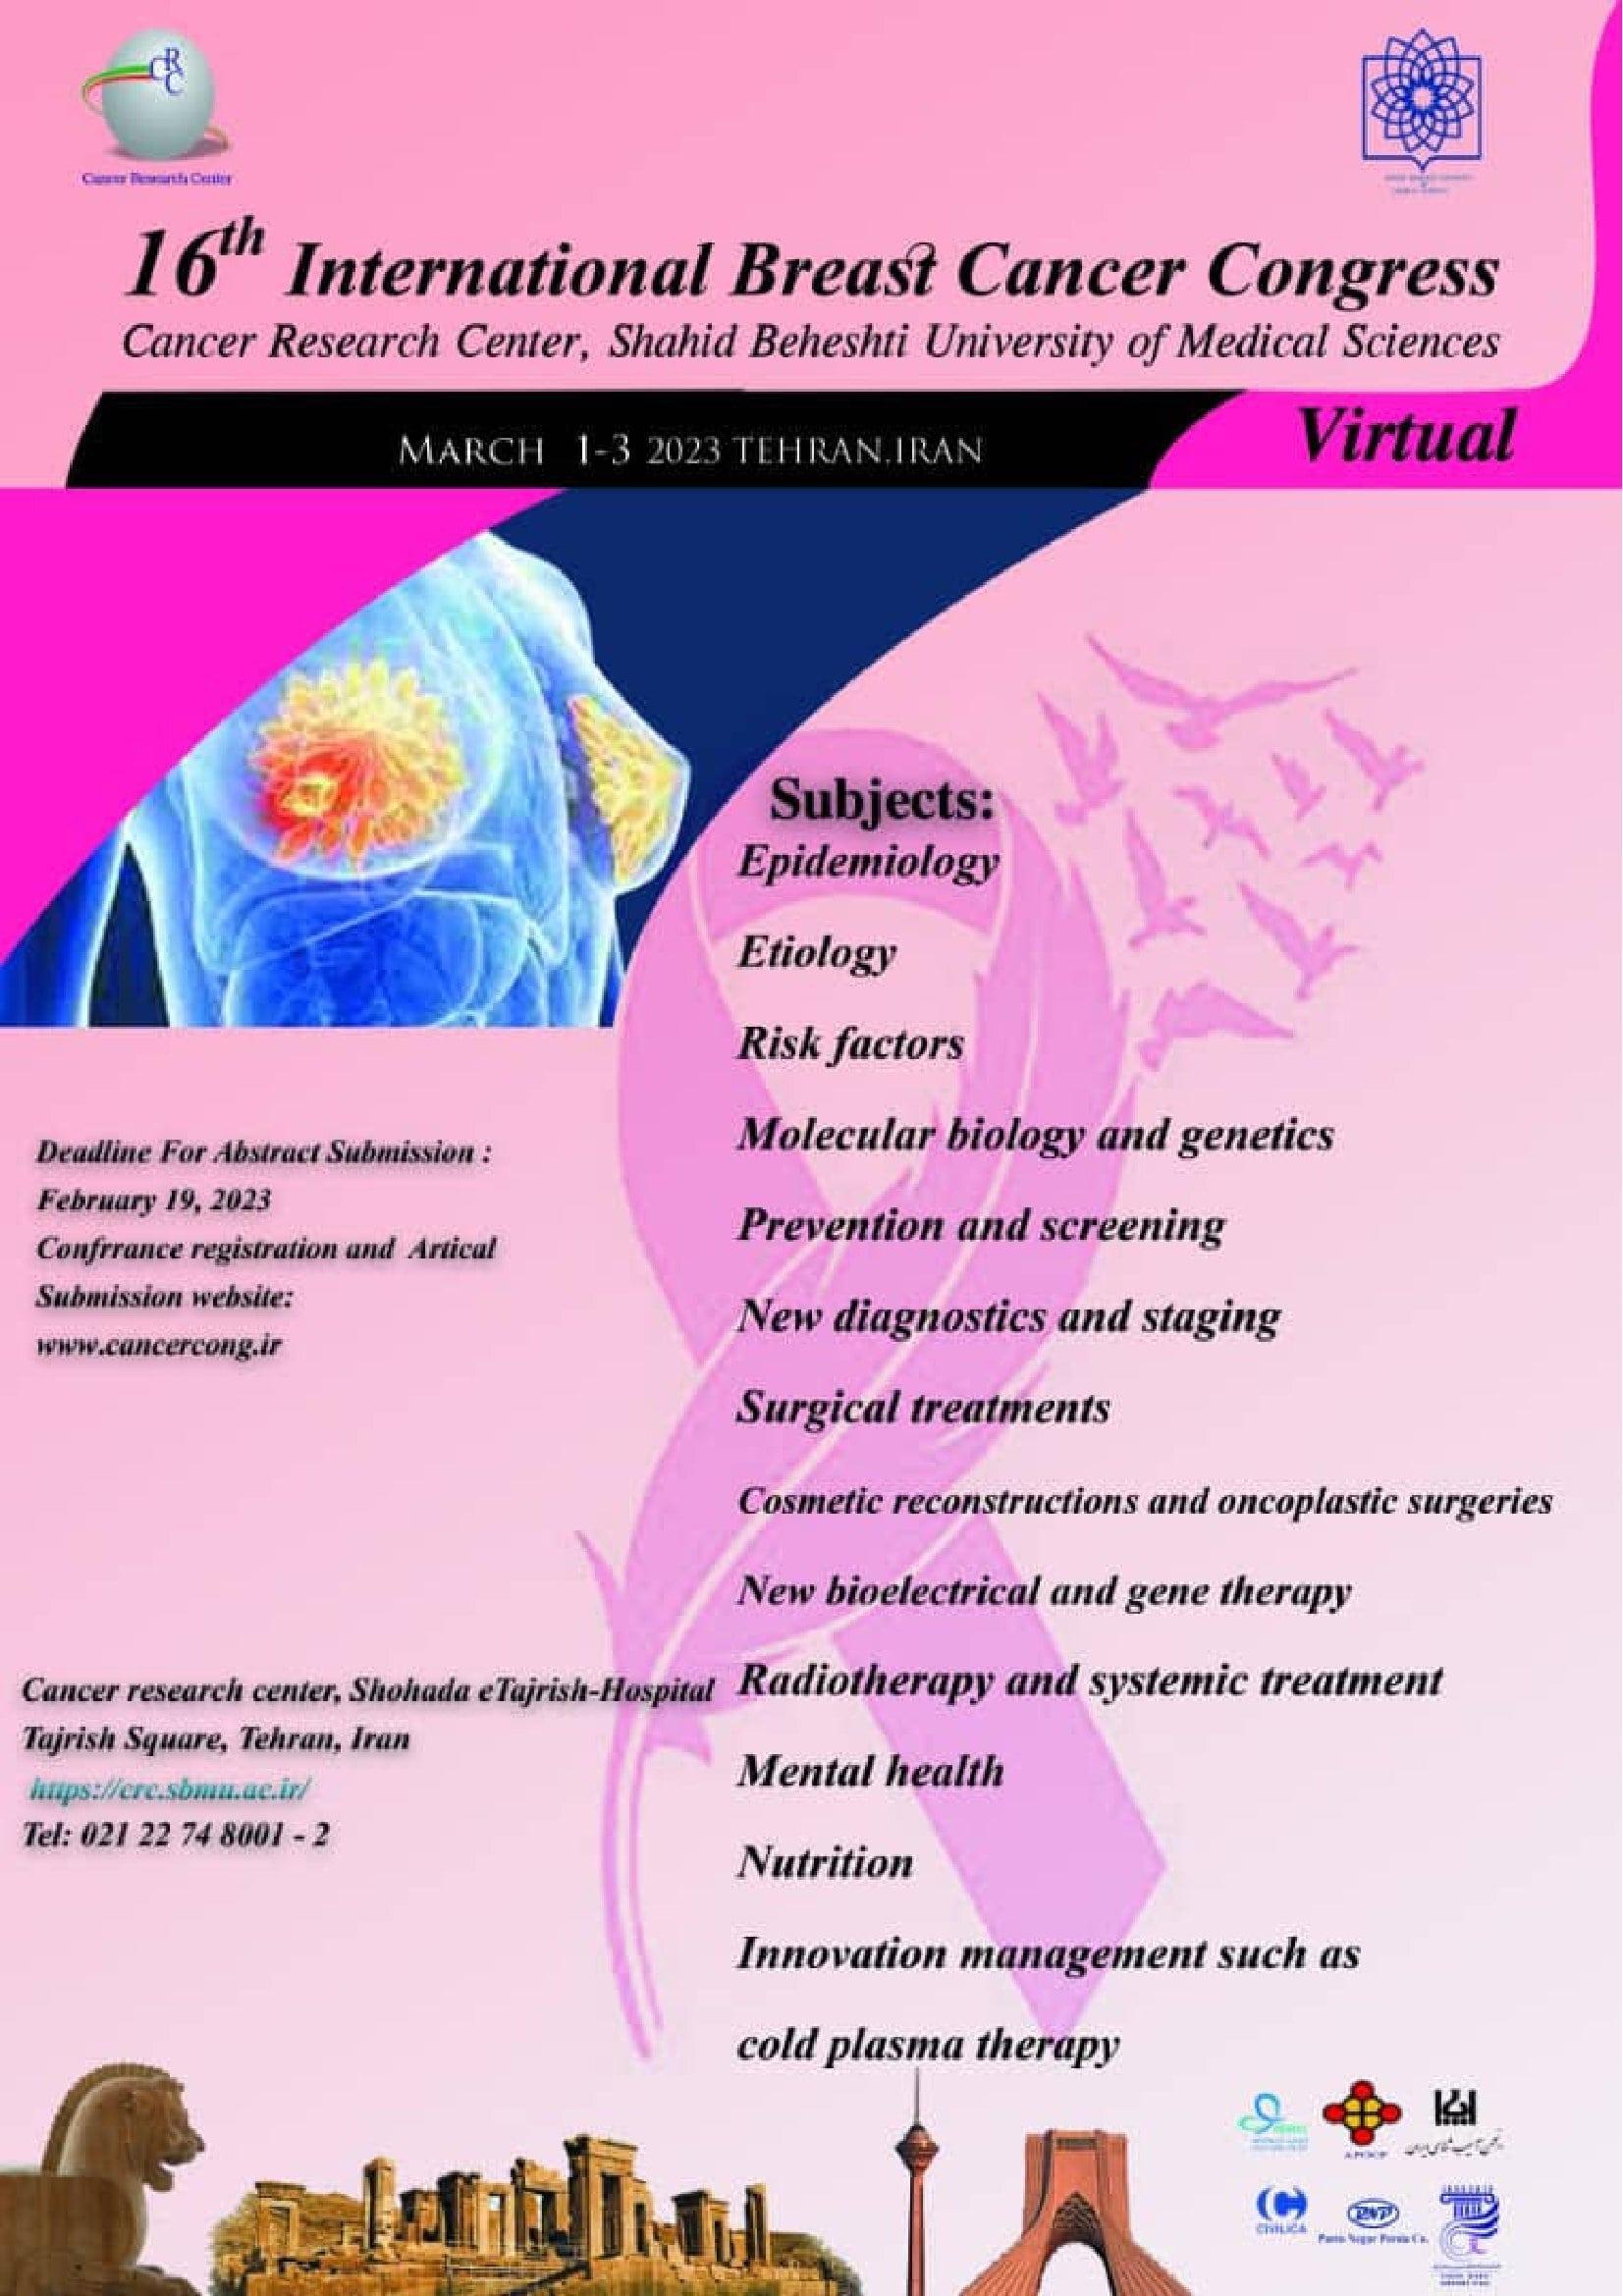 6th International Breast Cancer Congress